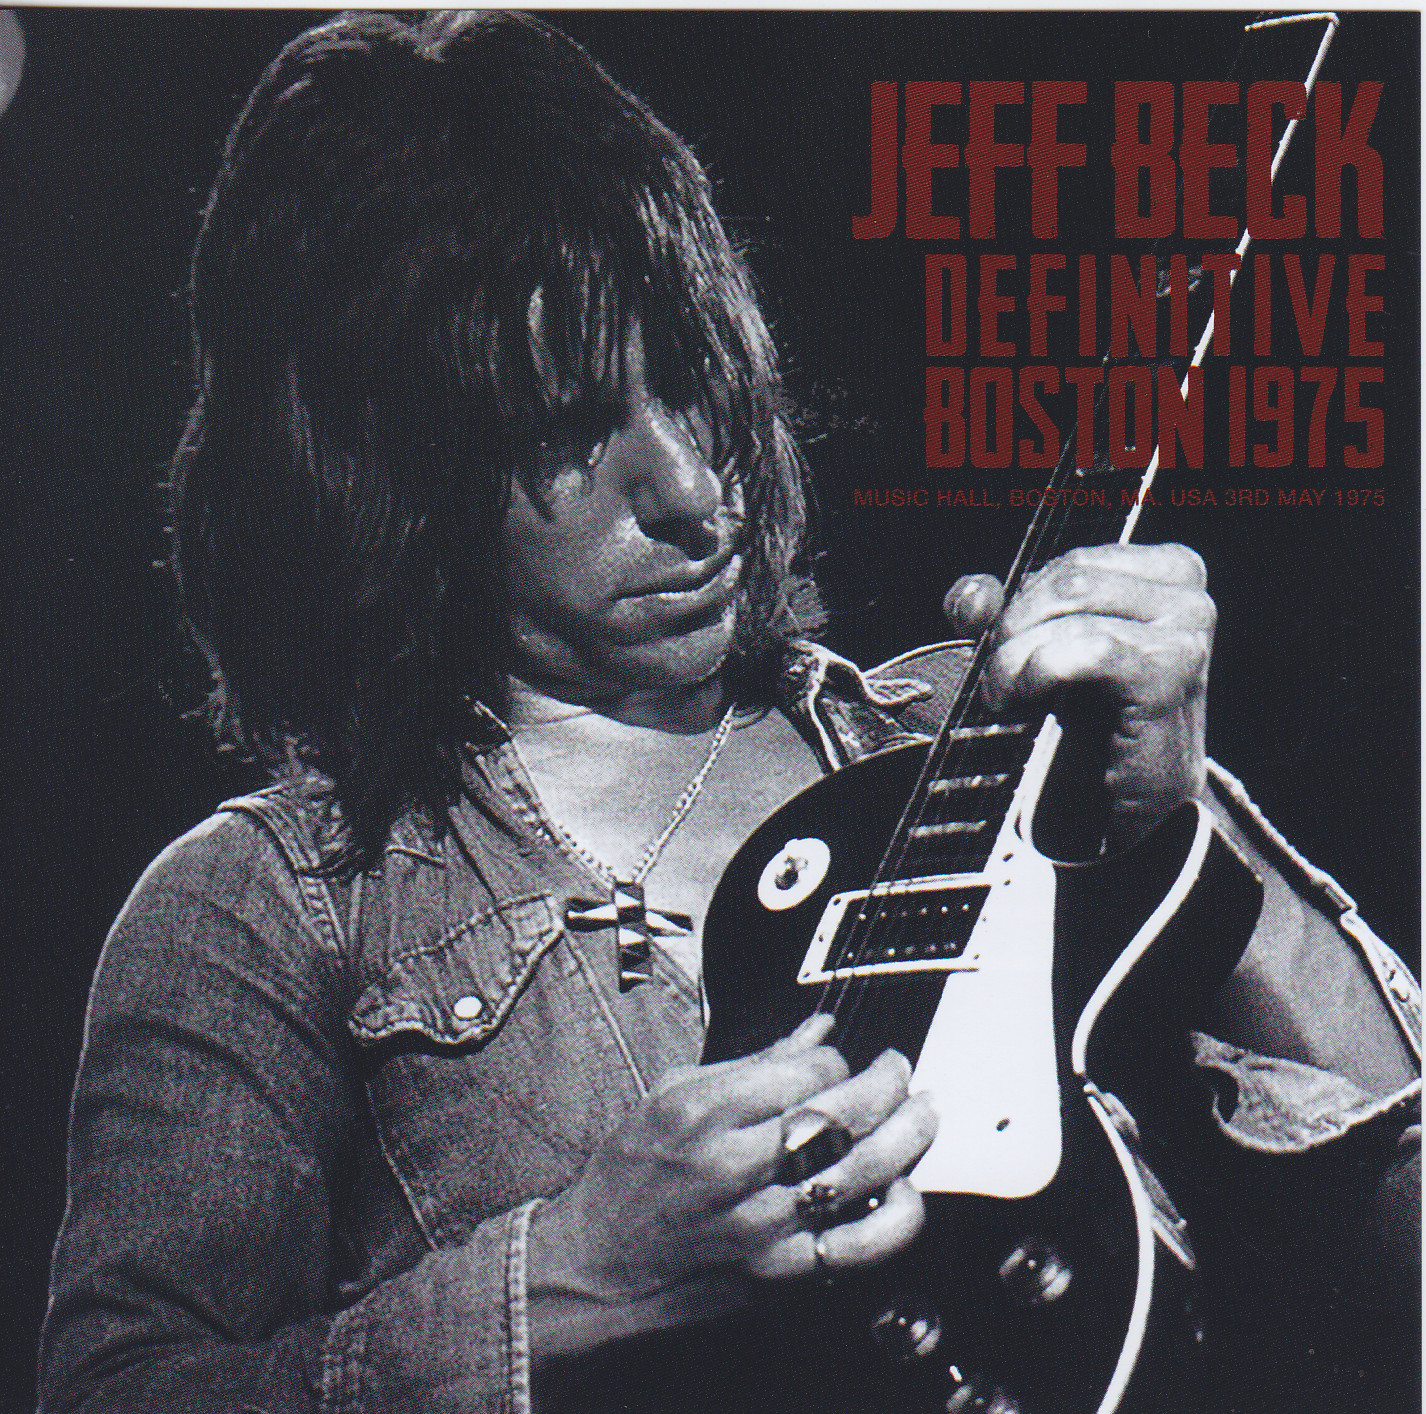 Jeff Beck / Definitive Boston 1975 / 1CD – GiGinJapan